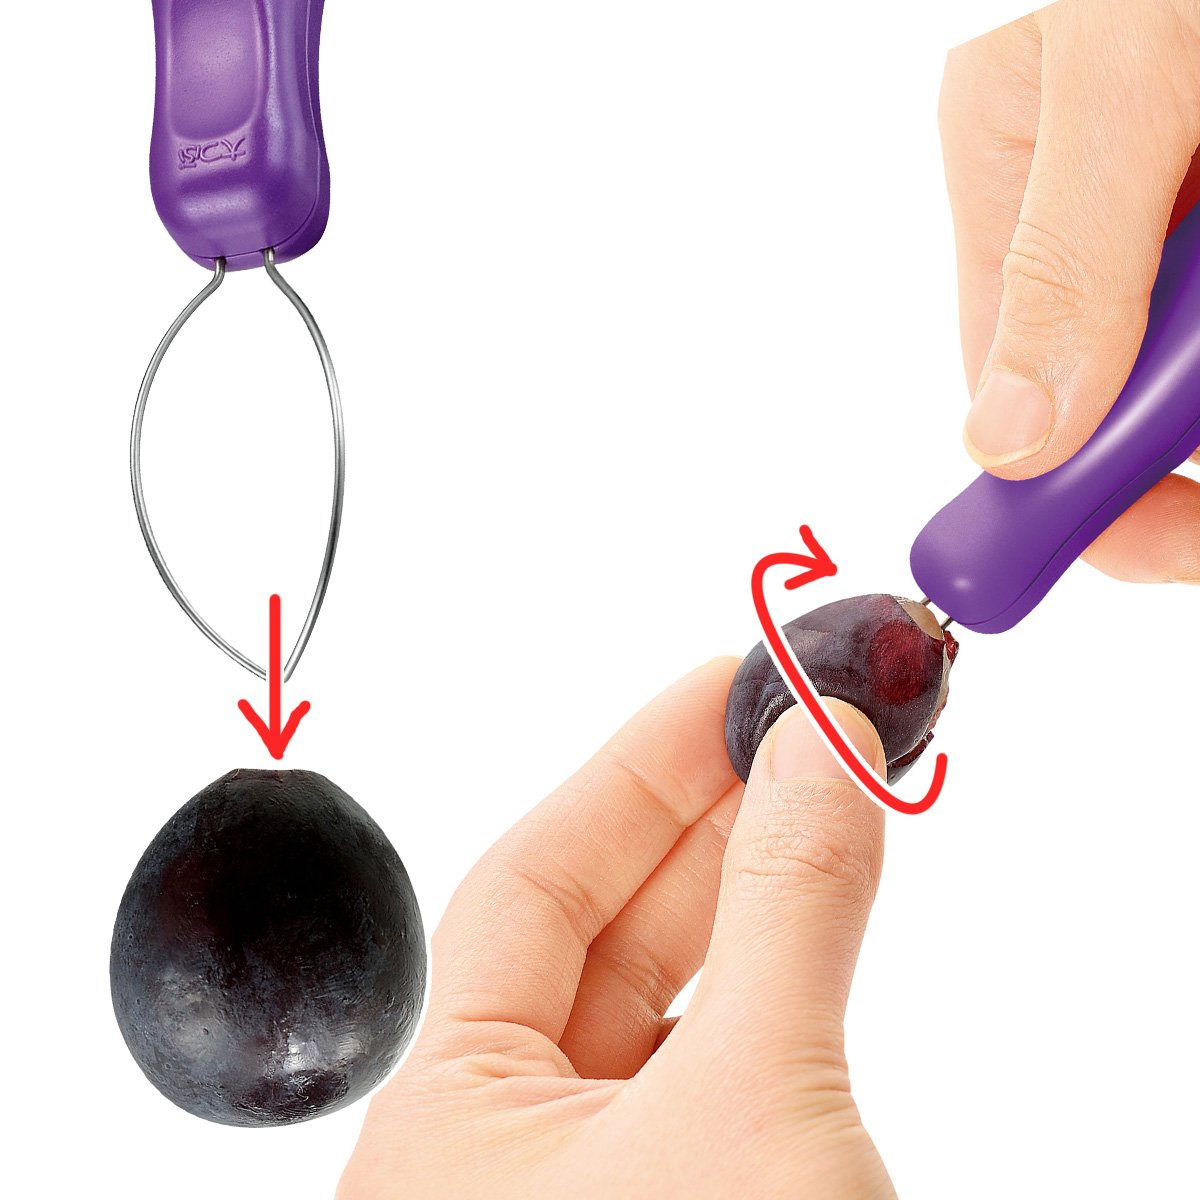 Grape Peeler, Portable Kitchen Gadget Peeling Tool 